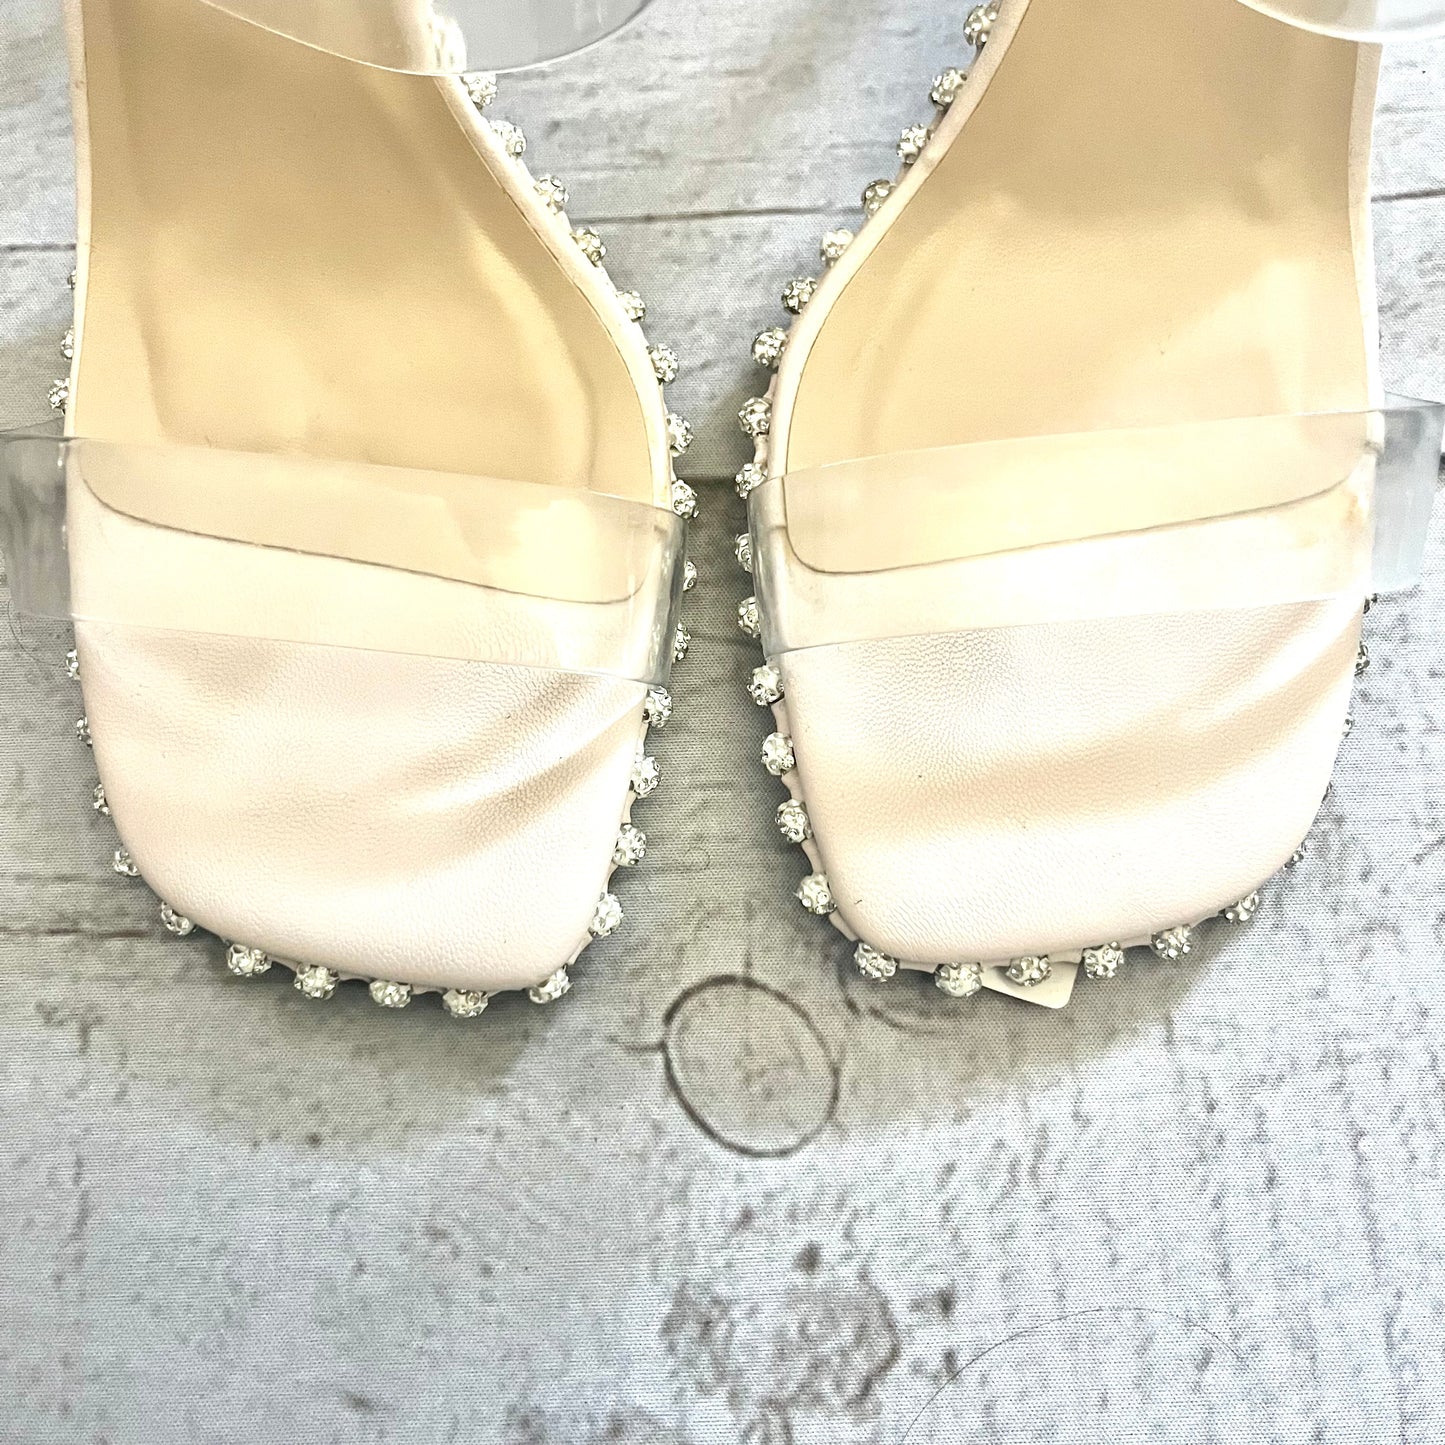 Sandals Heels Stiletto By Steve Madden  Size: 11